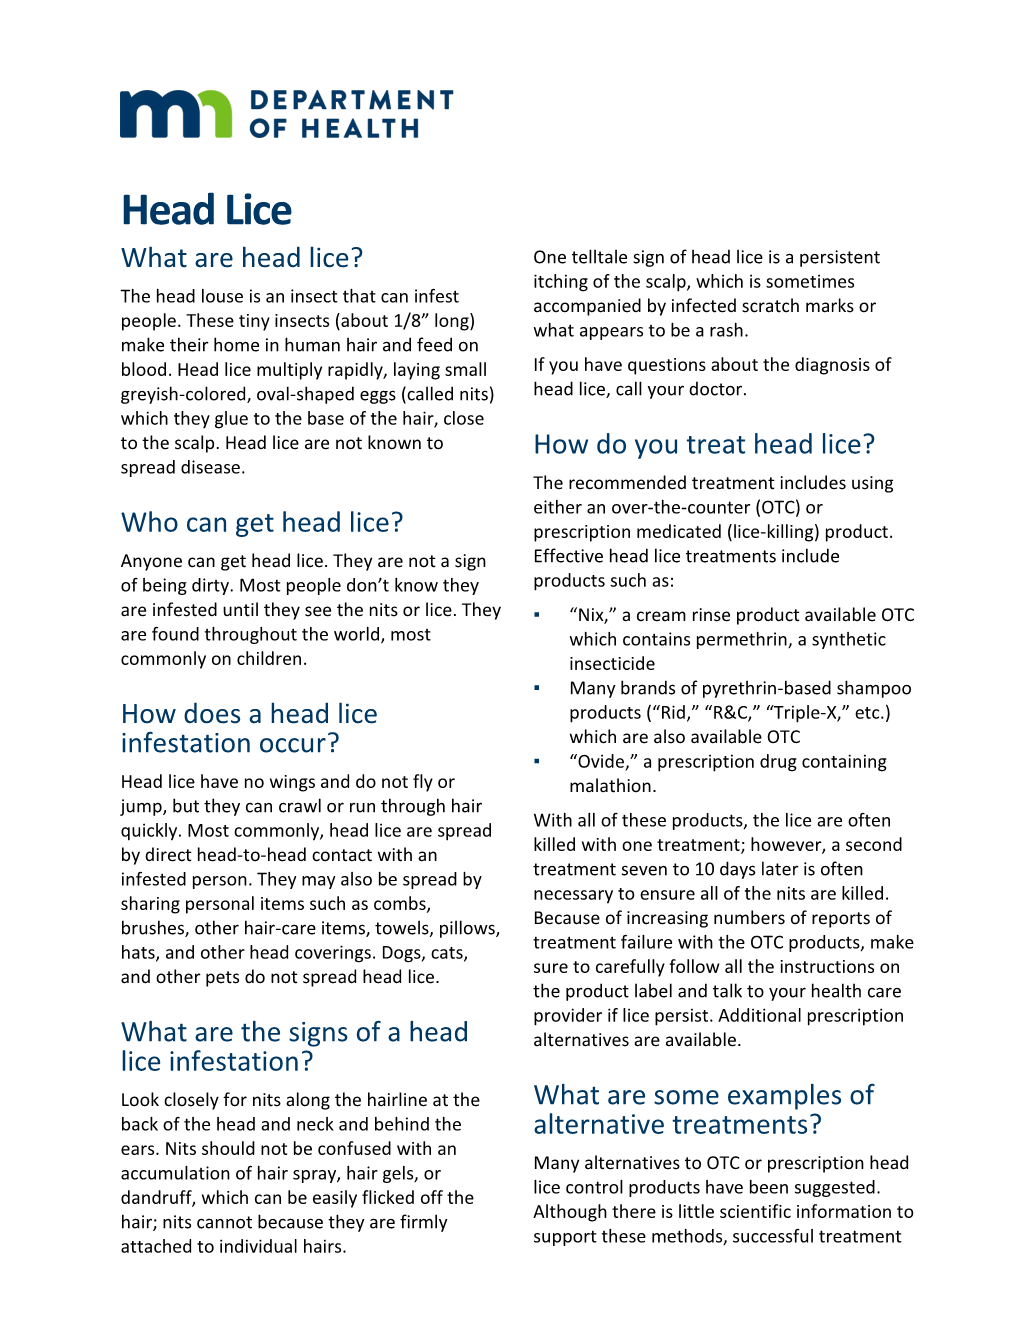 Head Lice Fact Sheet (PDF)